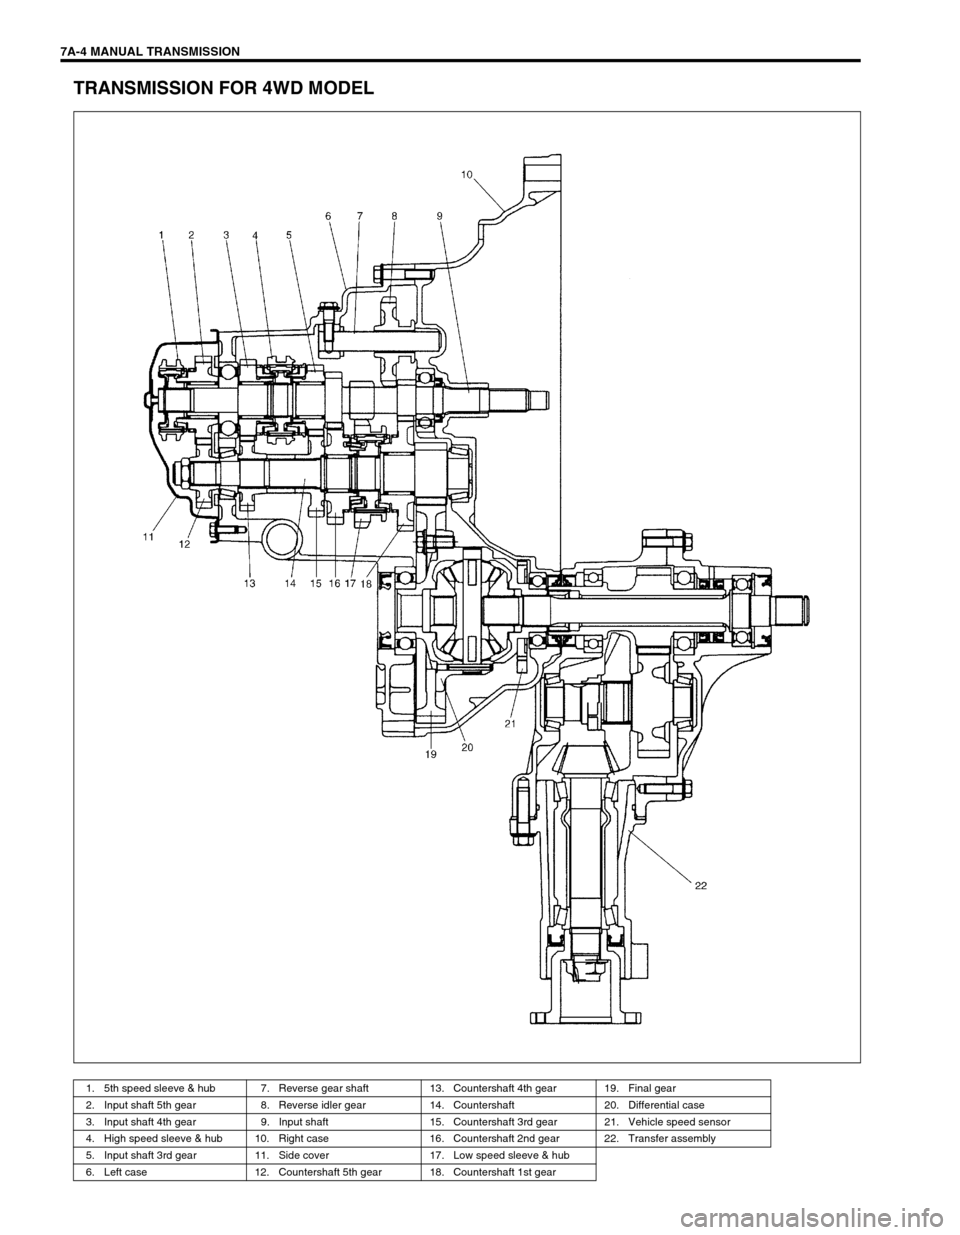 SUZUKI SWIFT 2000 1.G Transmission Service Workshop Manual 7A-4 MANUAL TRANSMISSION
TRANSMISSION FOR 4WD MODEL
1. 5th speed sleeve & hub 7. Reverse gear shaft 13. Countershaft 4th gear 19. Final gear
2. Input shaft 5th gear 8. Reverse idler gear 14. Countersh